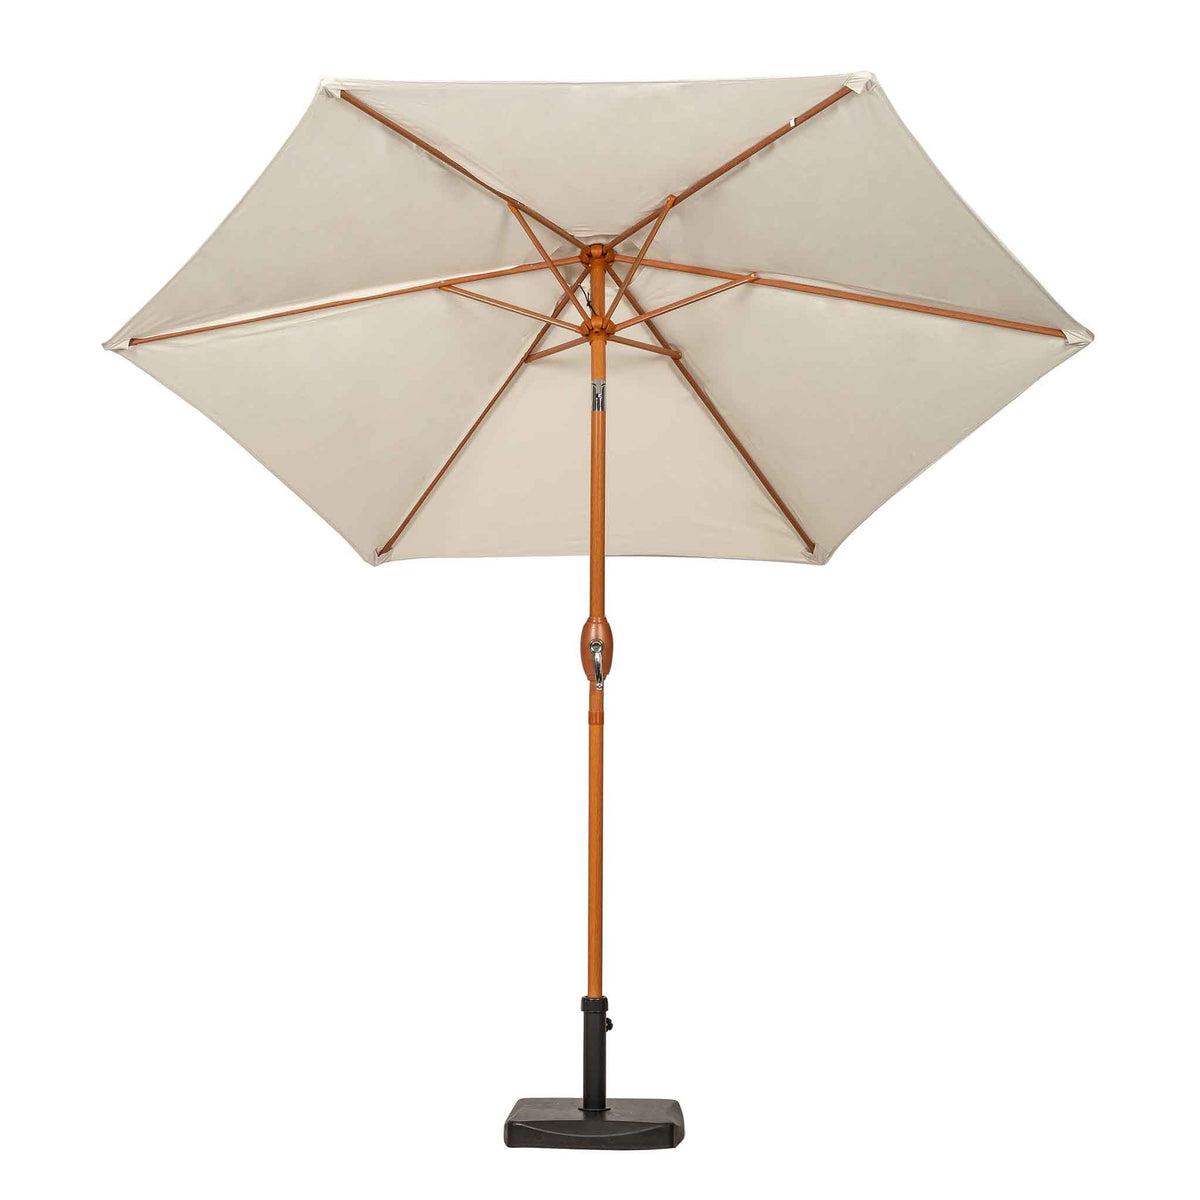 2.5m Ivory Crank & Tilt Garden Umbrella with wood look aluminium frame